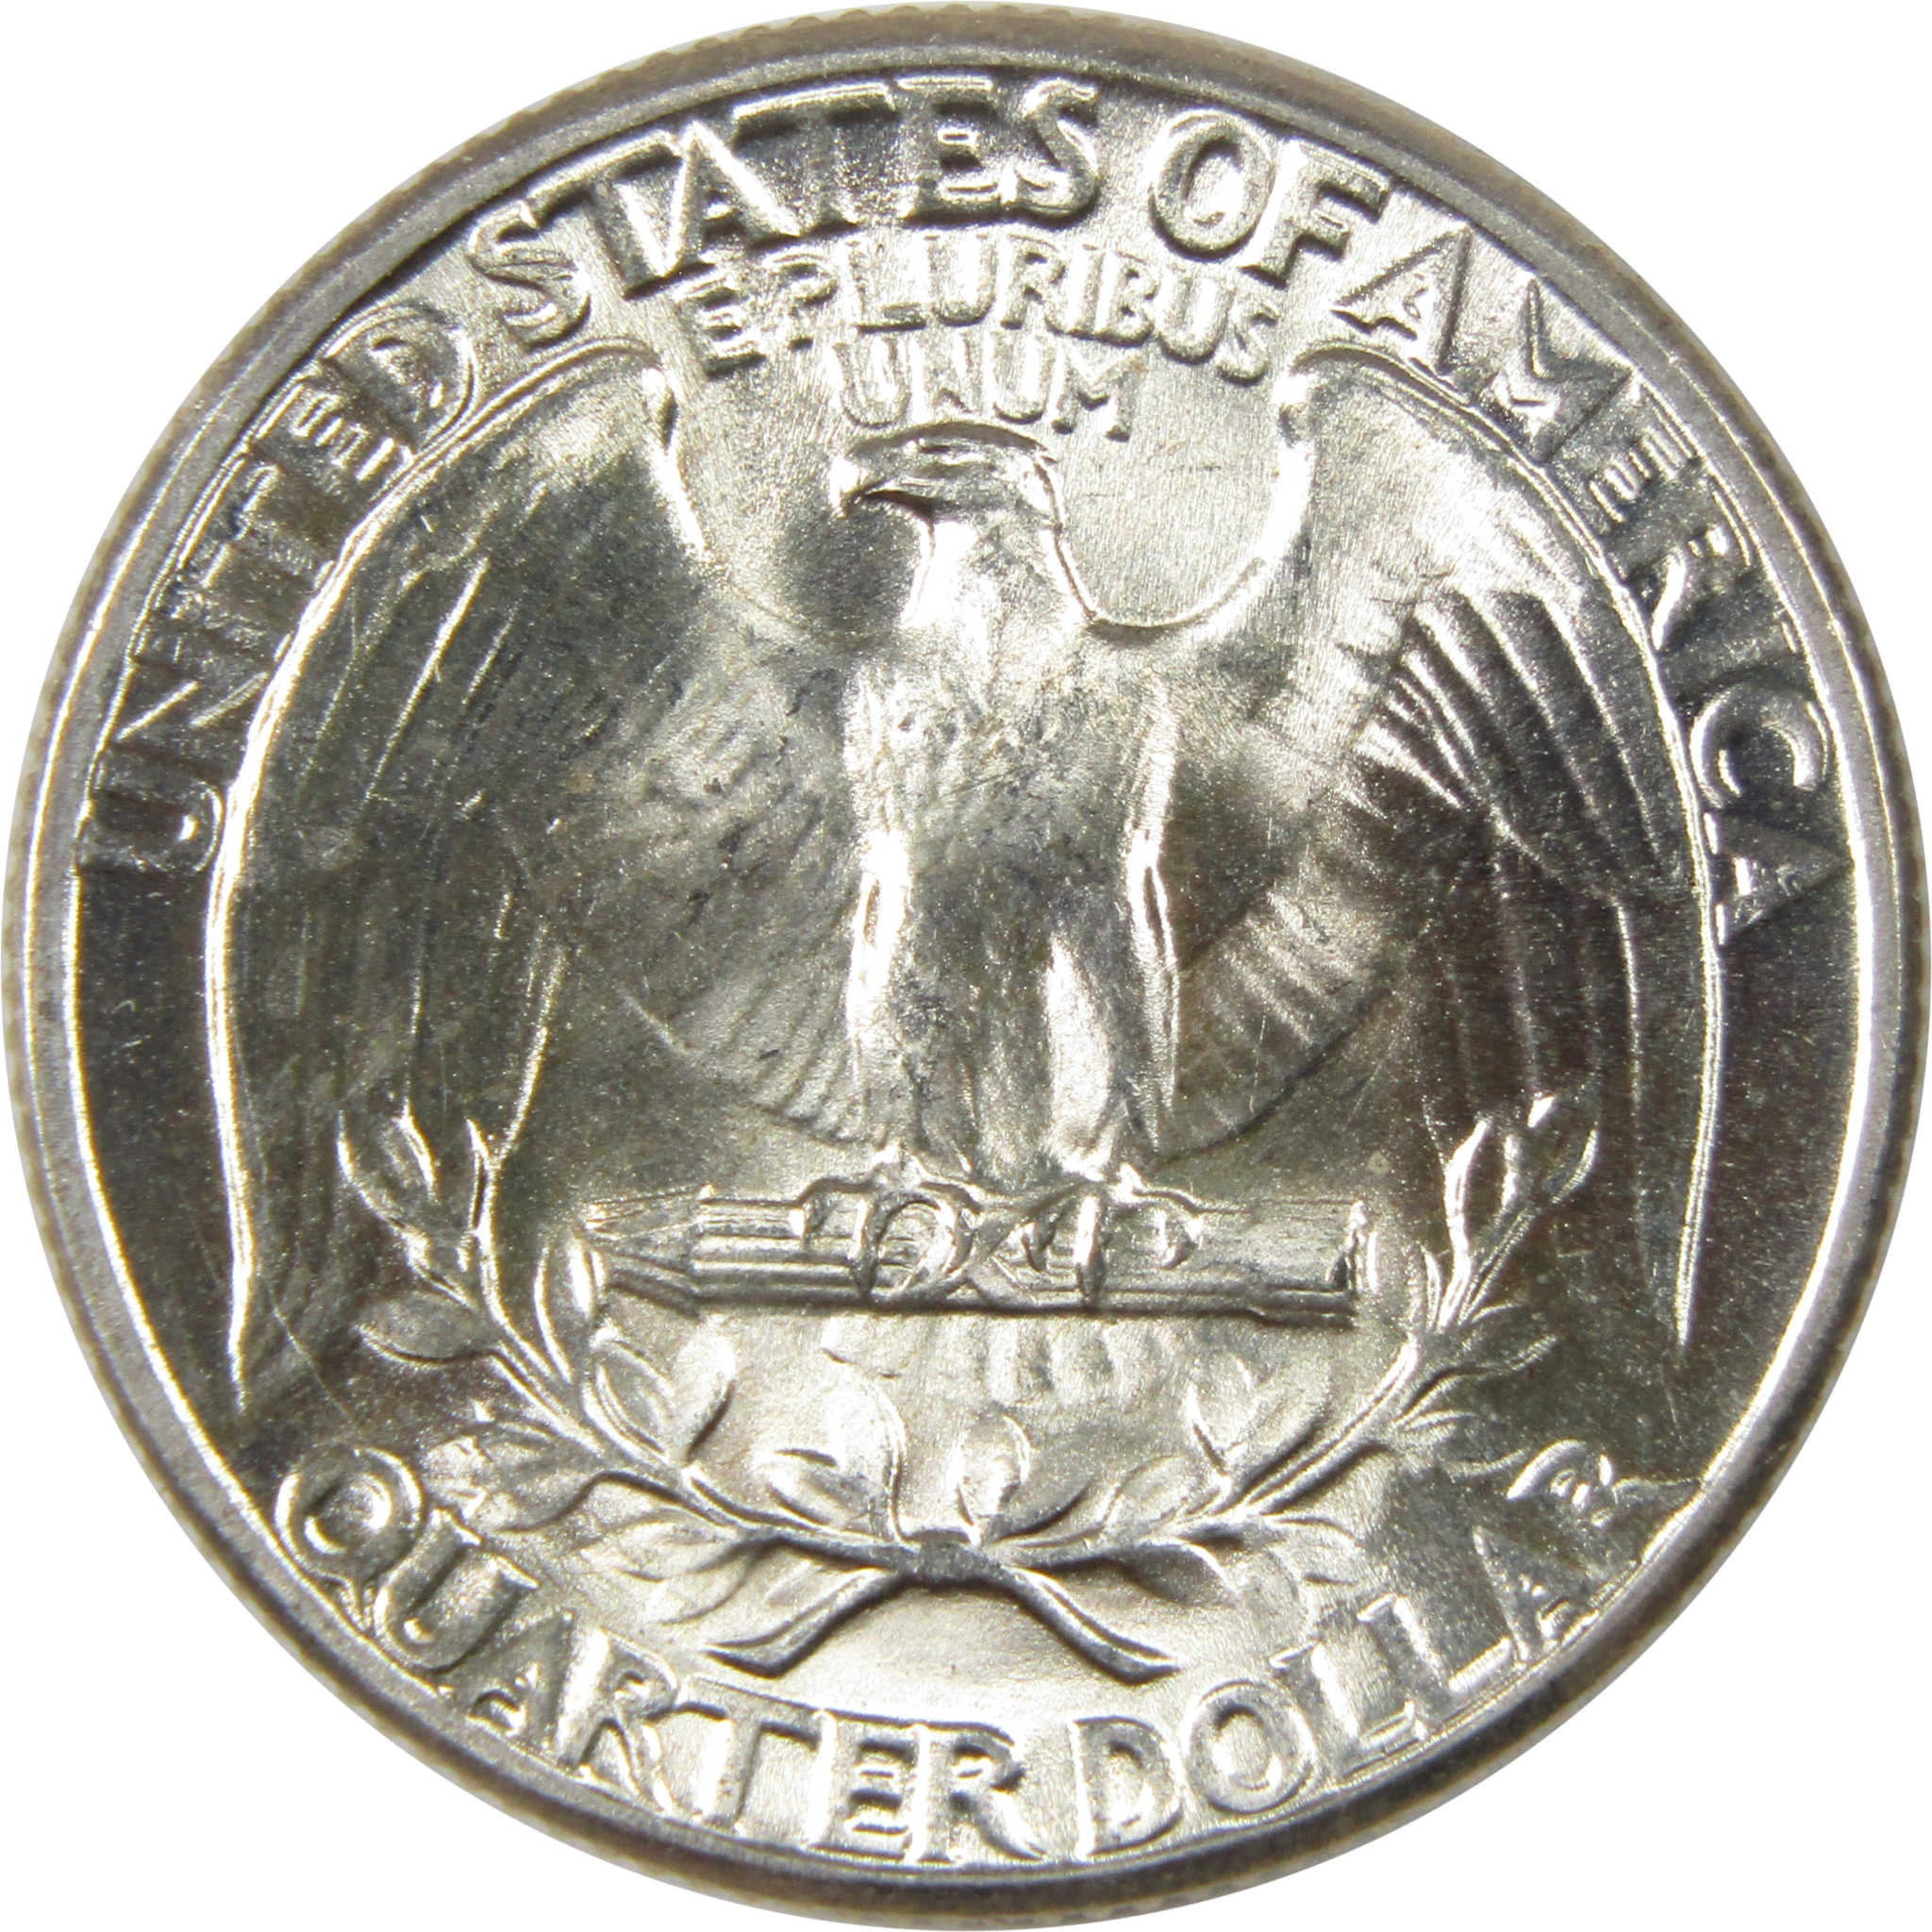 1940 Washington Quarter BU Uncirculated Silver 25c Coin